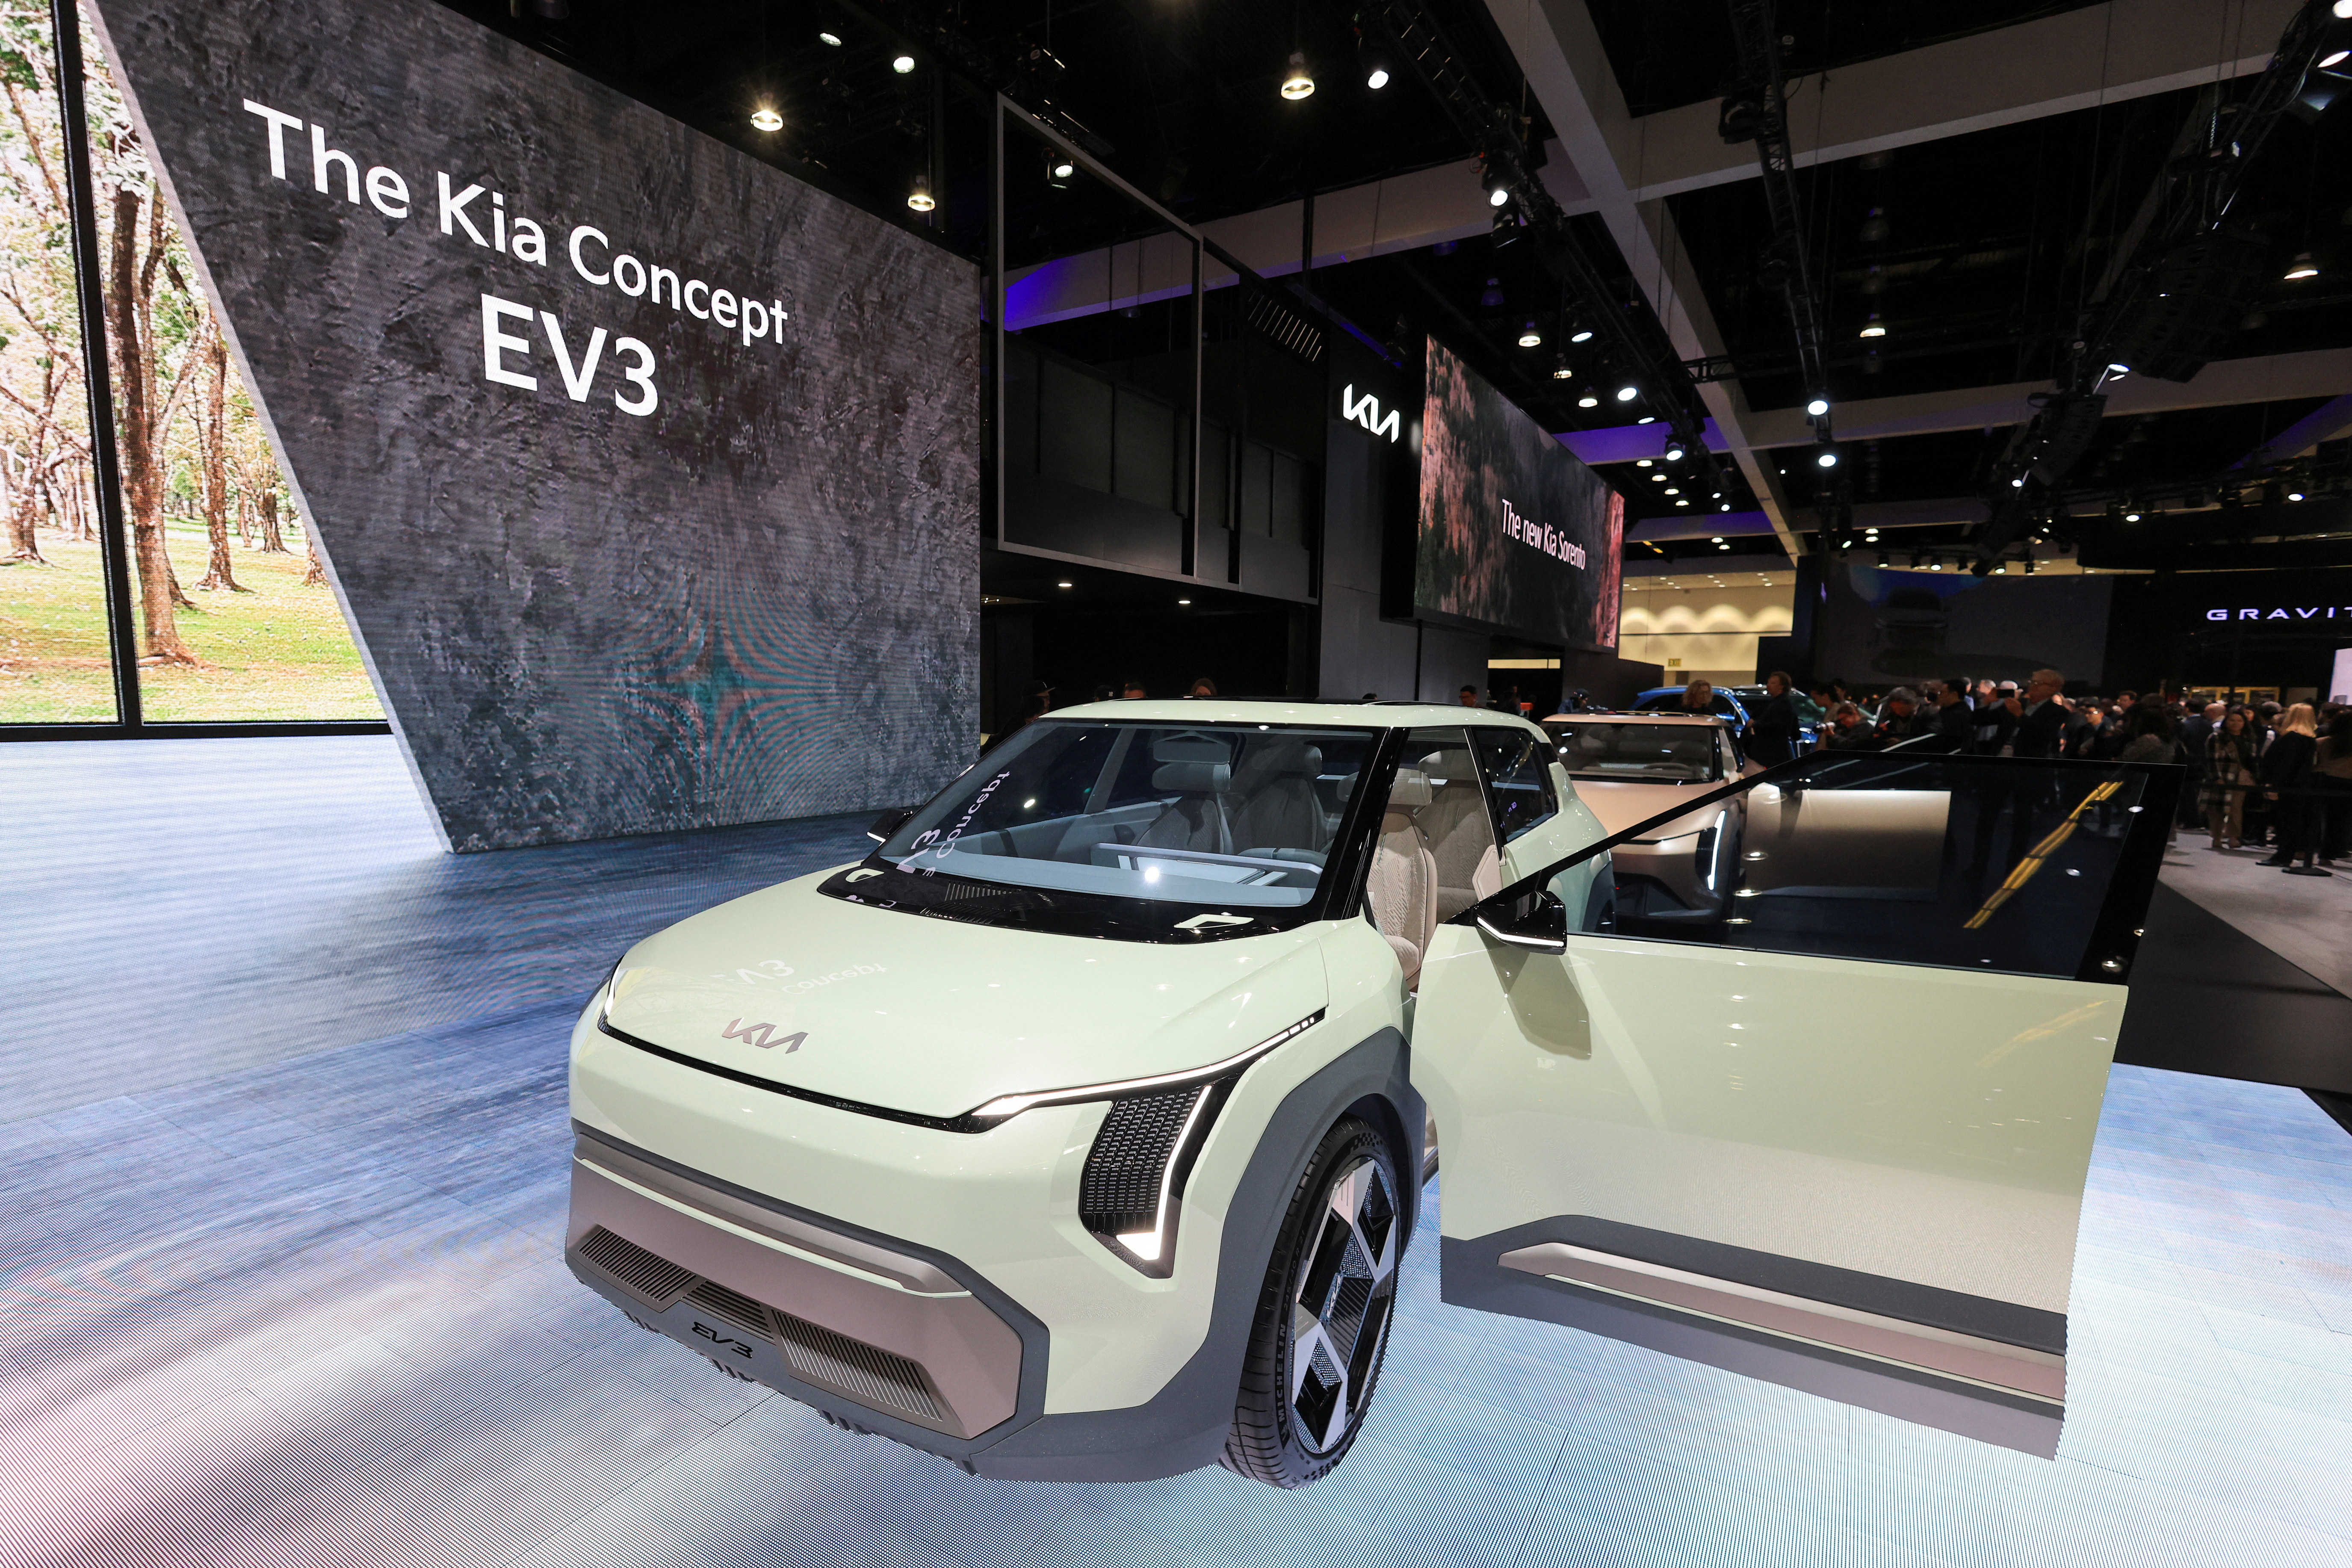 Hyundai, Kia see strong demand for EVs, despite rivals' concerns